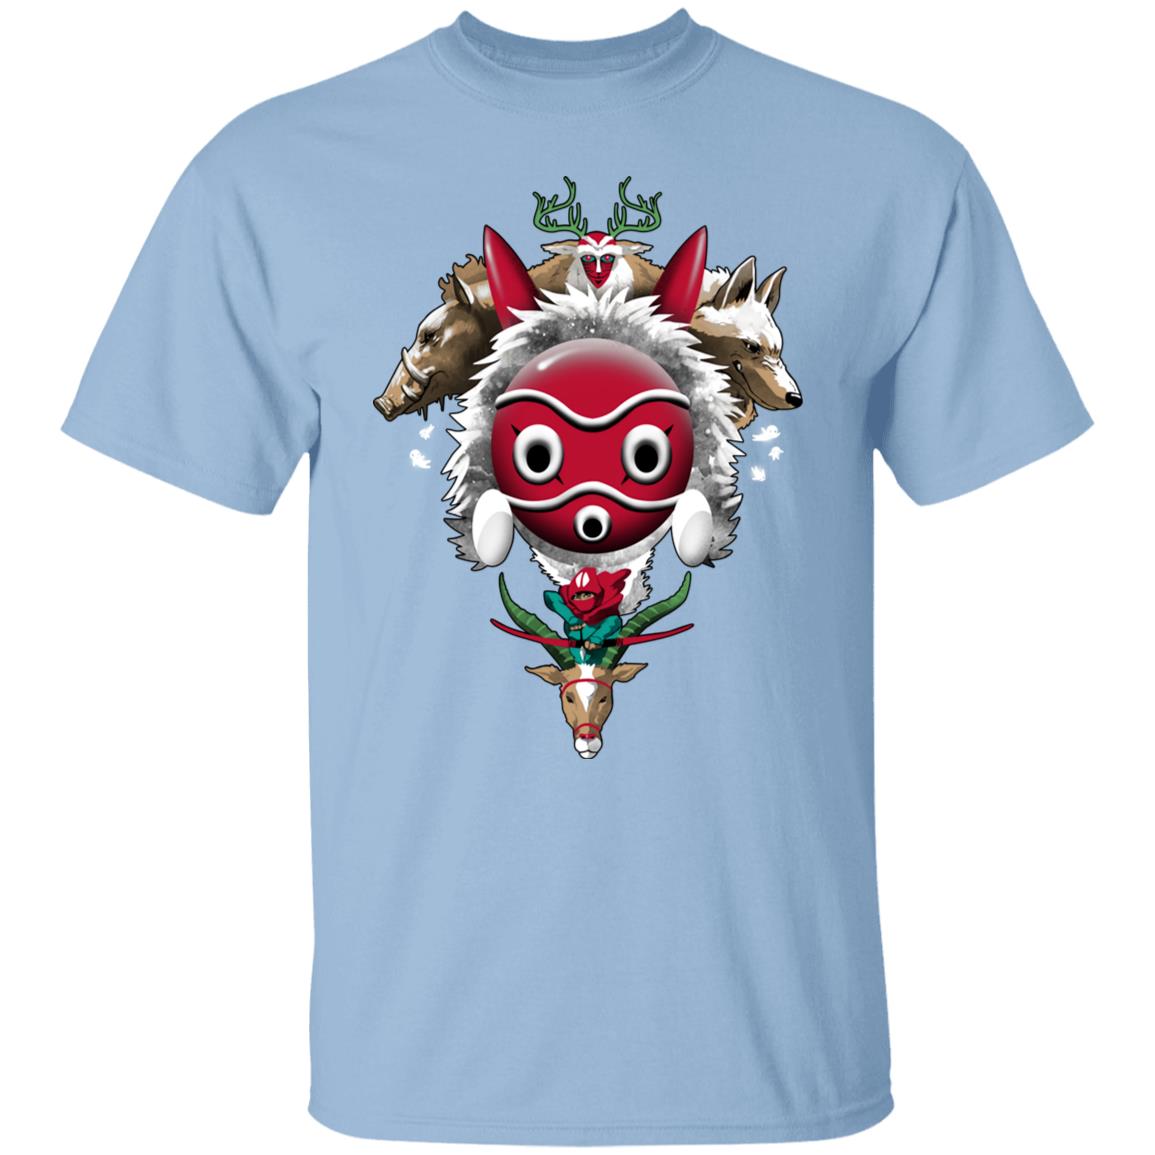 Princess Mononoke – The Forest Protectors T Shirt